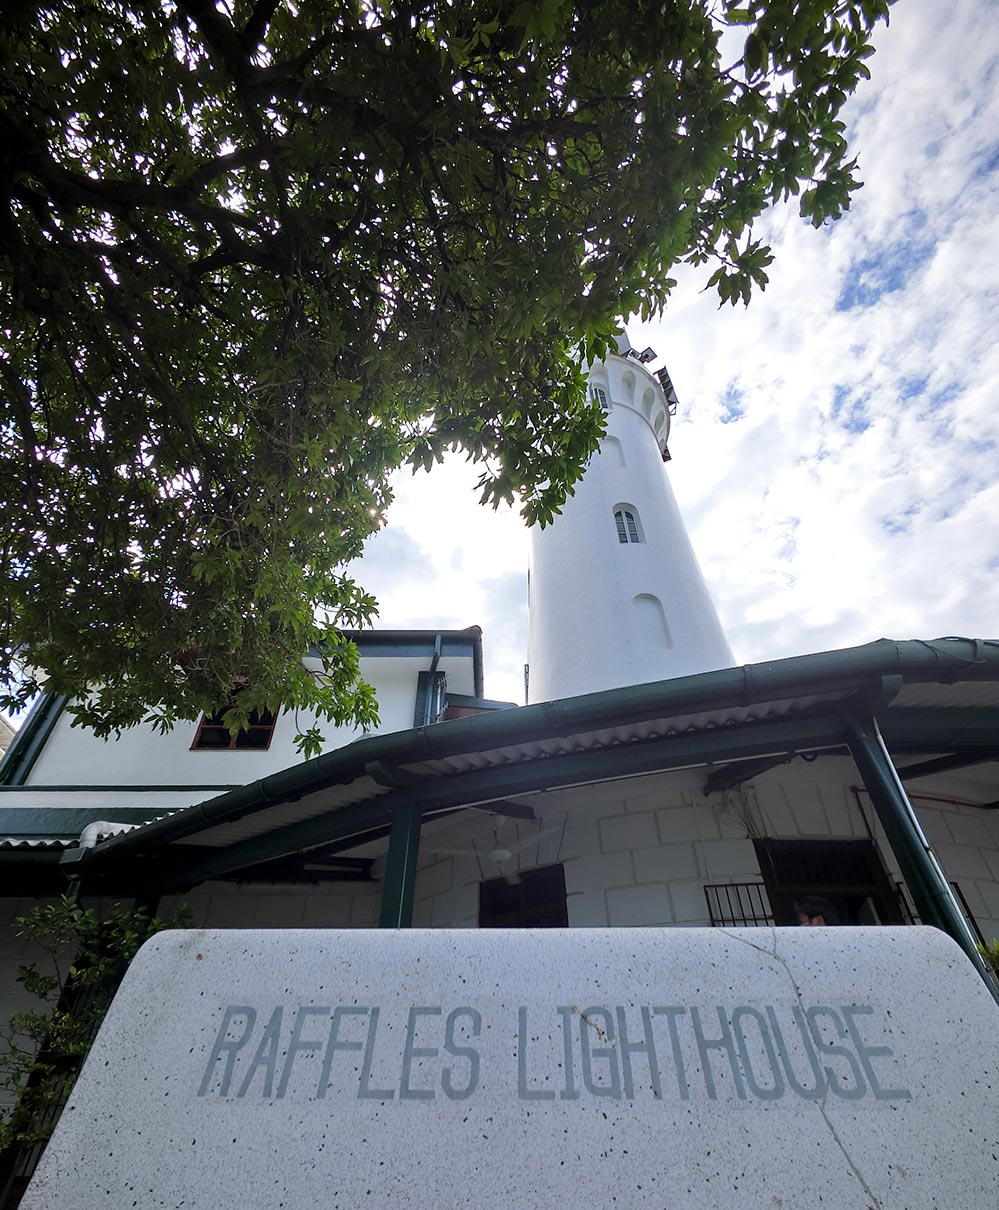 Raffles Lighthouse Bench